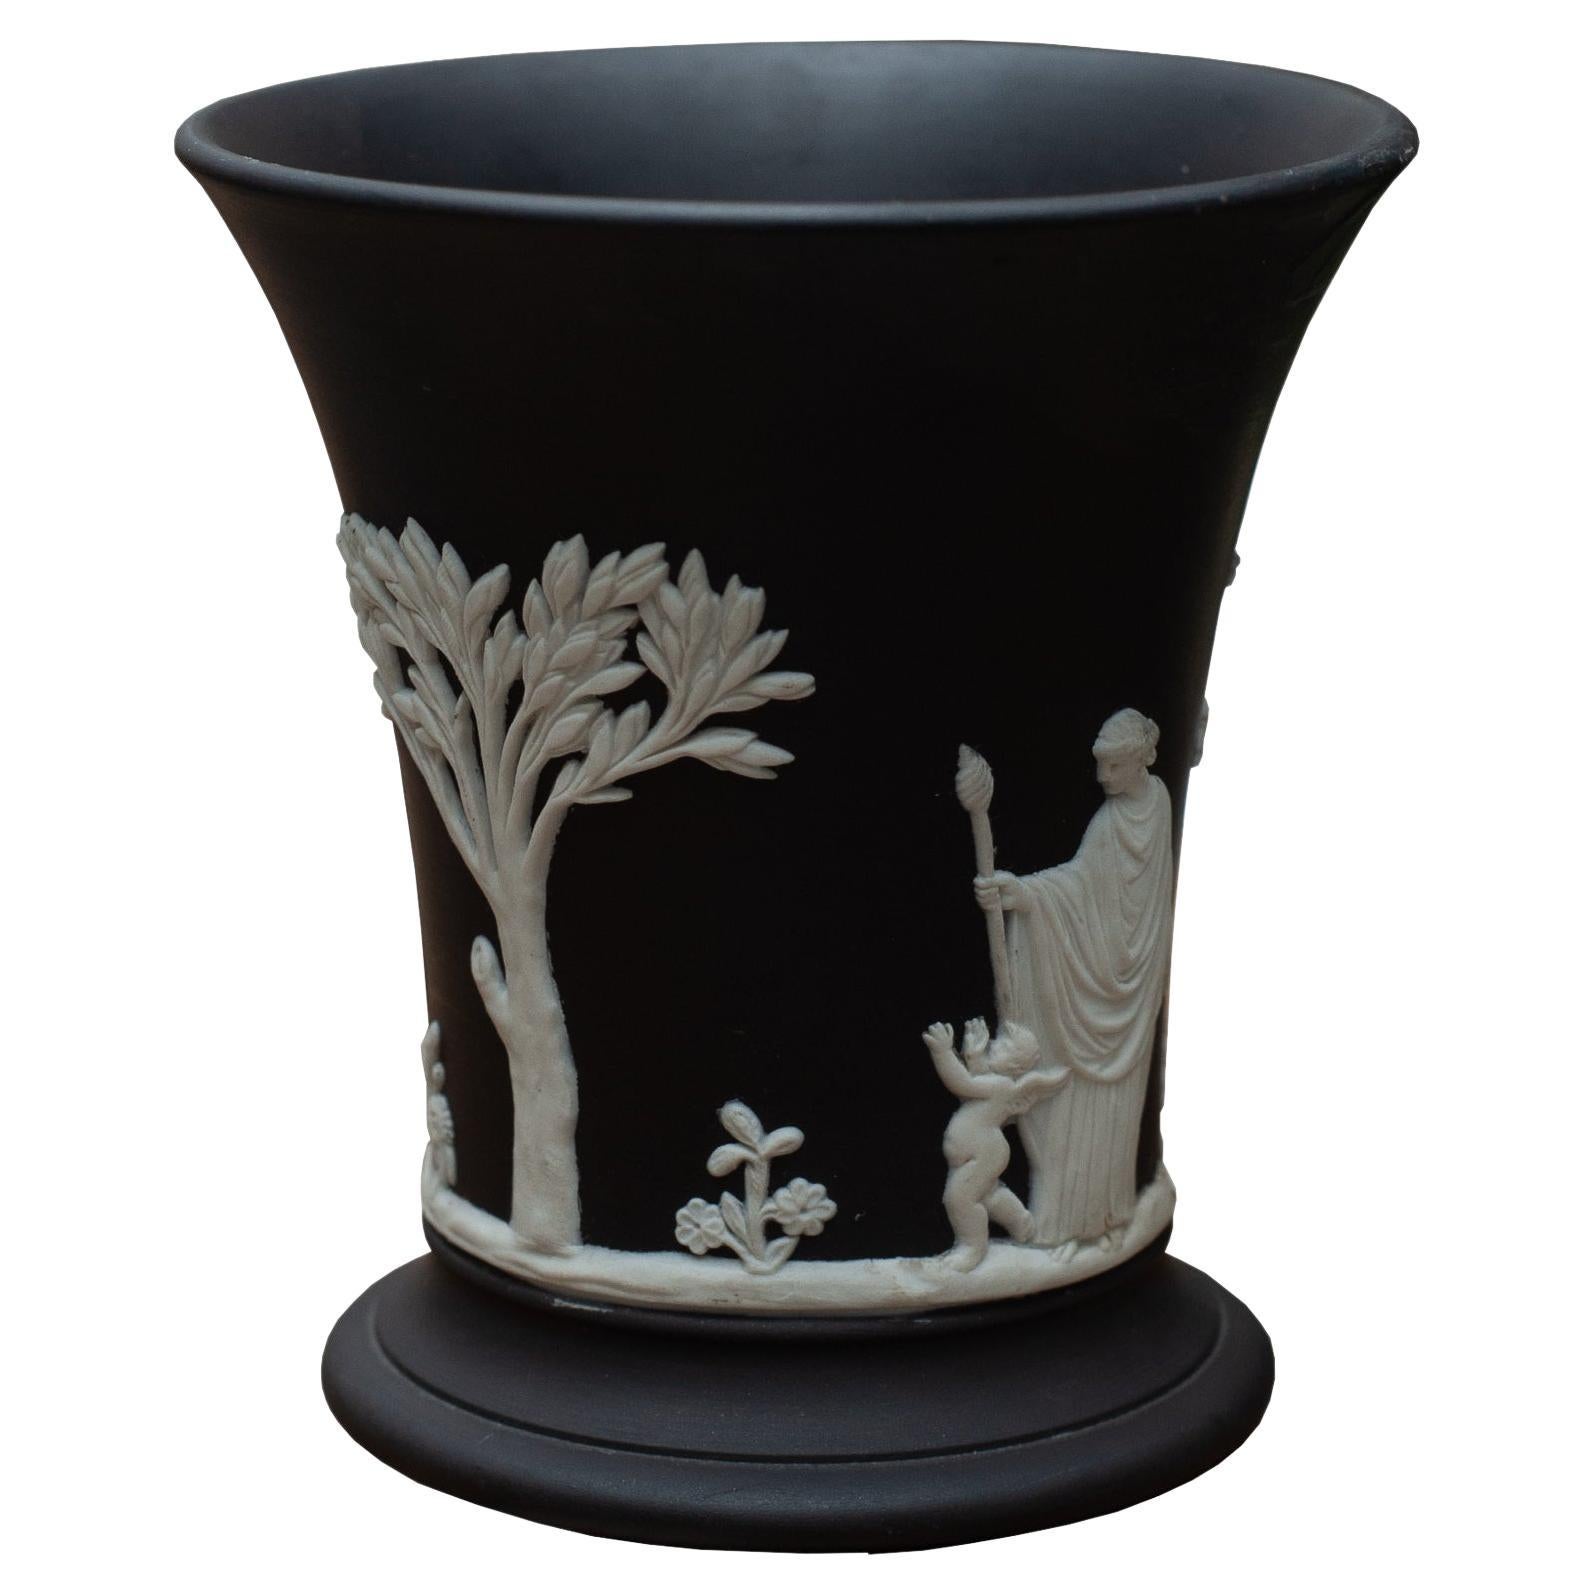 Rare 5.25 Wedgwood Green Jasperware Bud Vase Figurine Home Decor With Angels